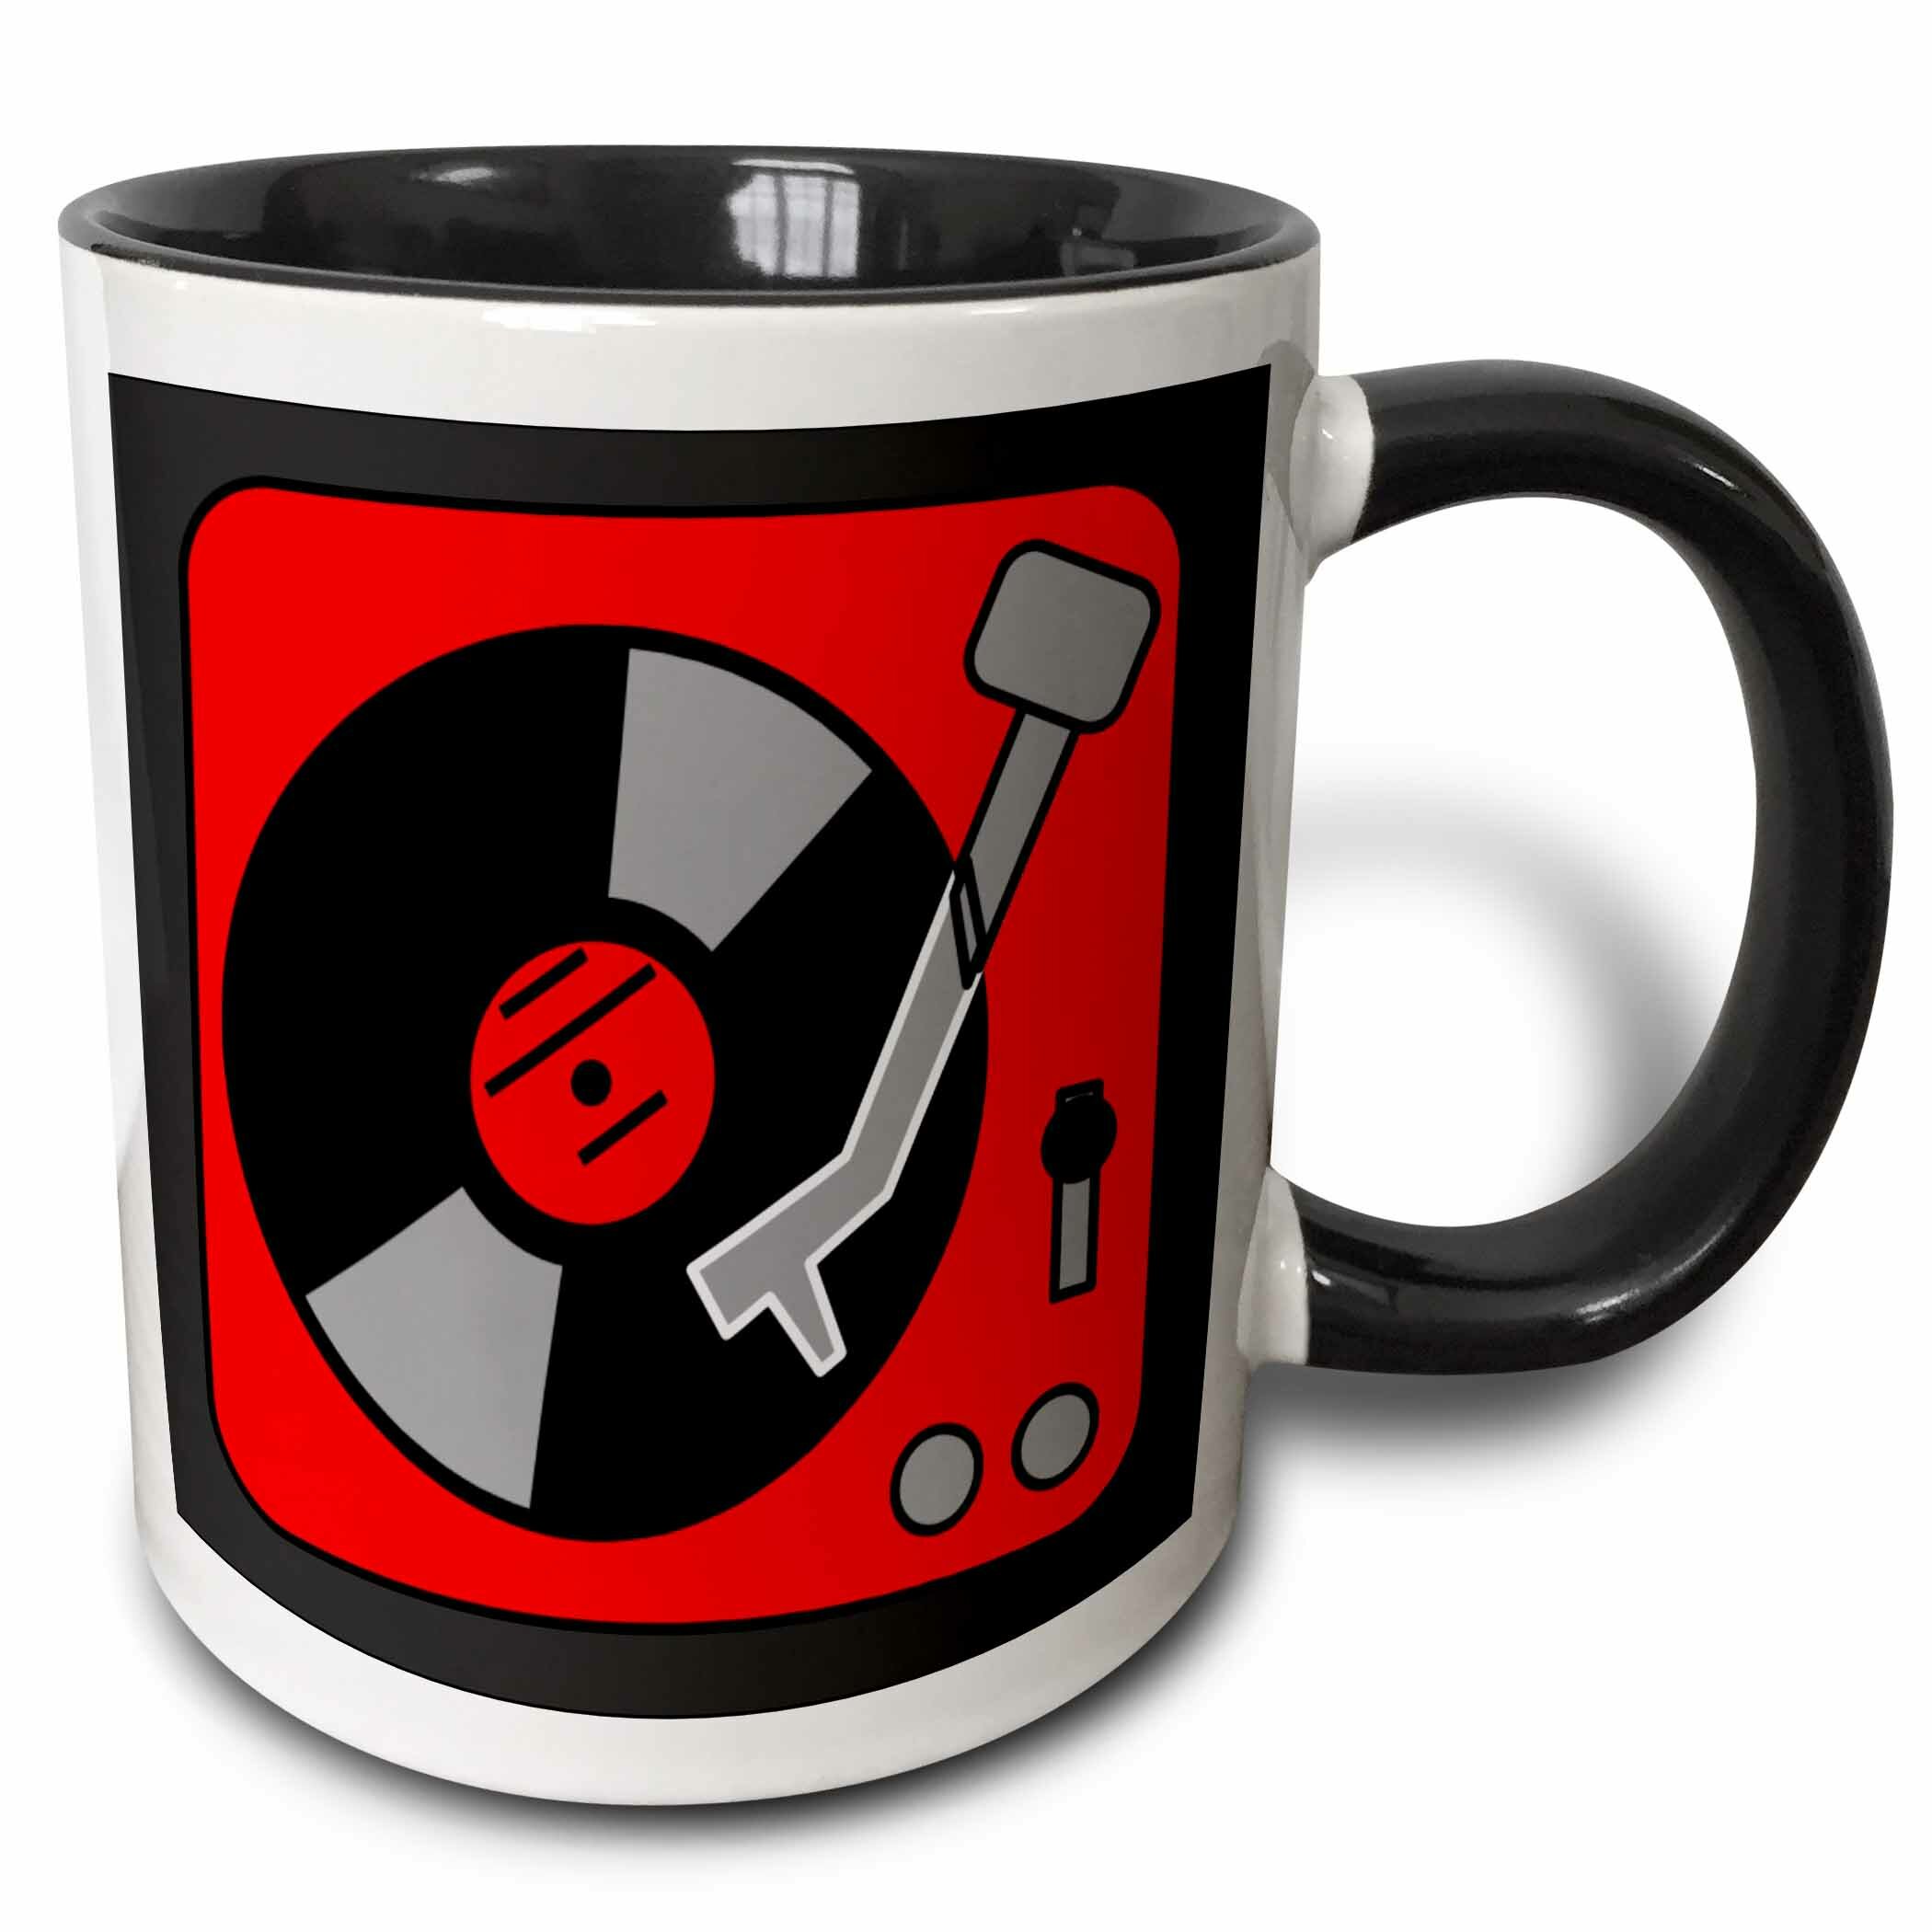 Printed Ceramic Coffee Tea Cup Gift Retro Gamer Aliens 11oz mug